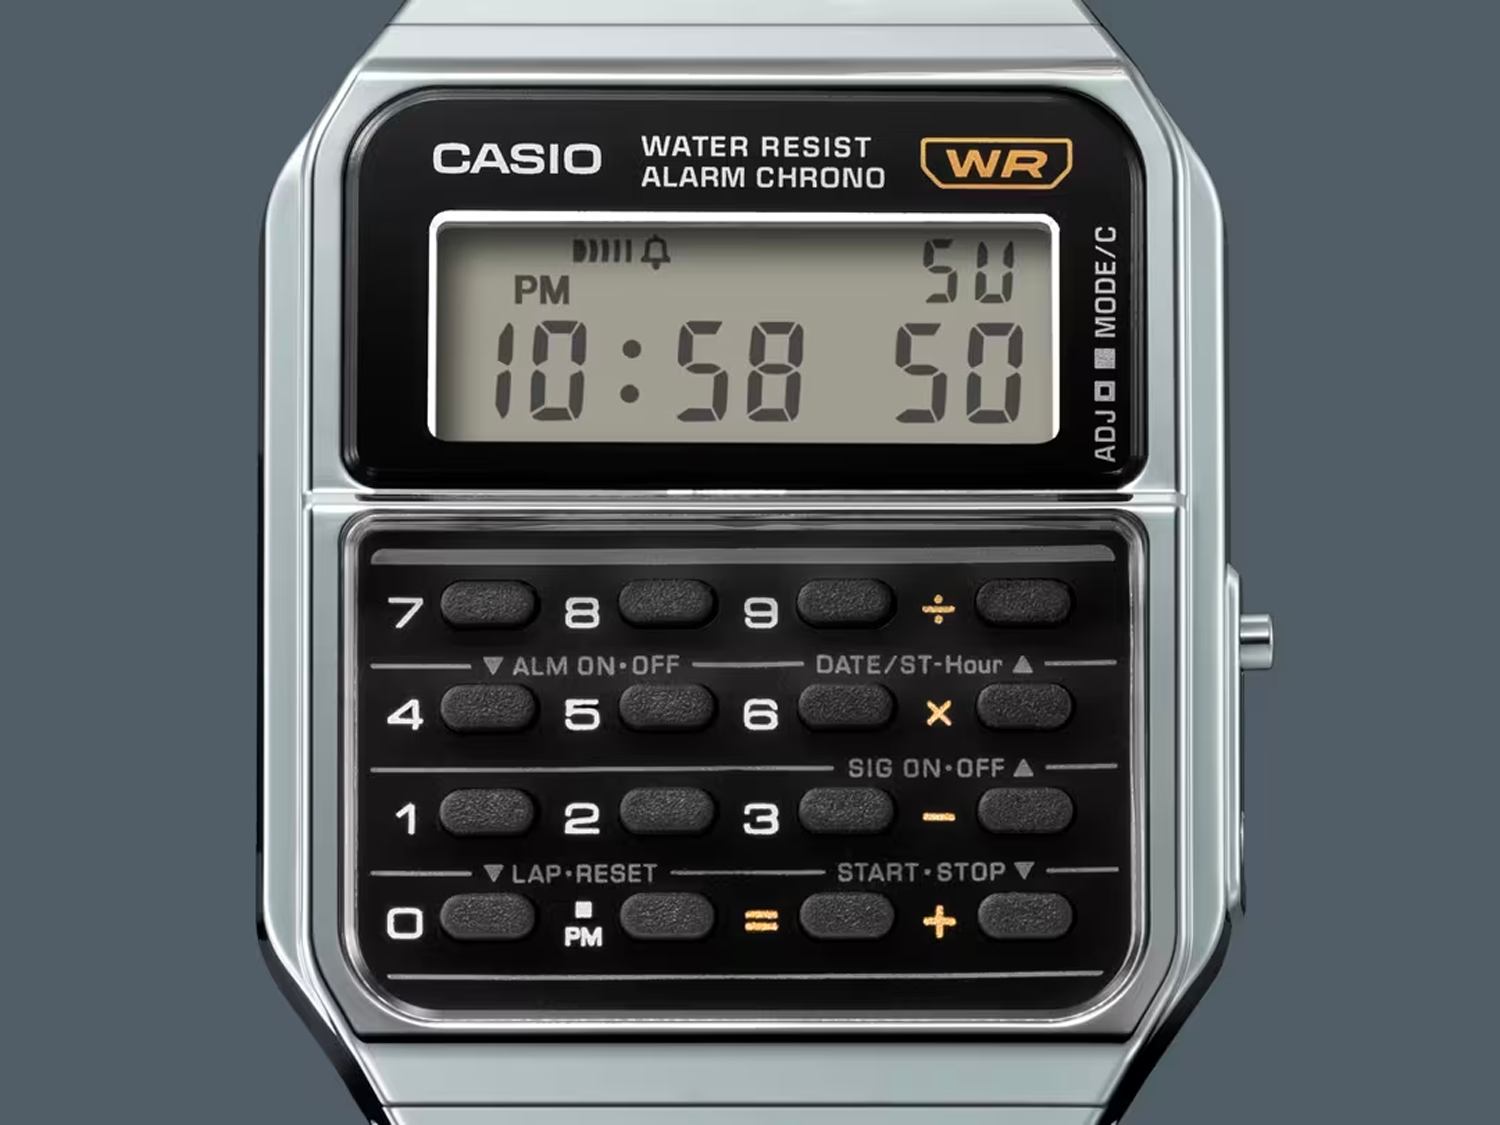 CA500 Watch Series Alarm Chrono